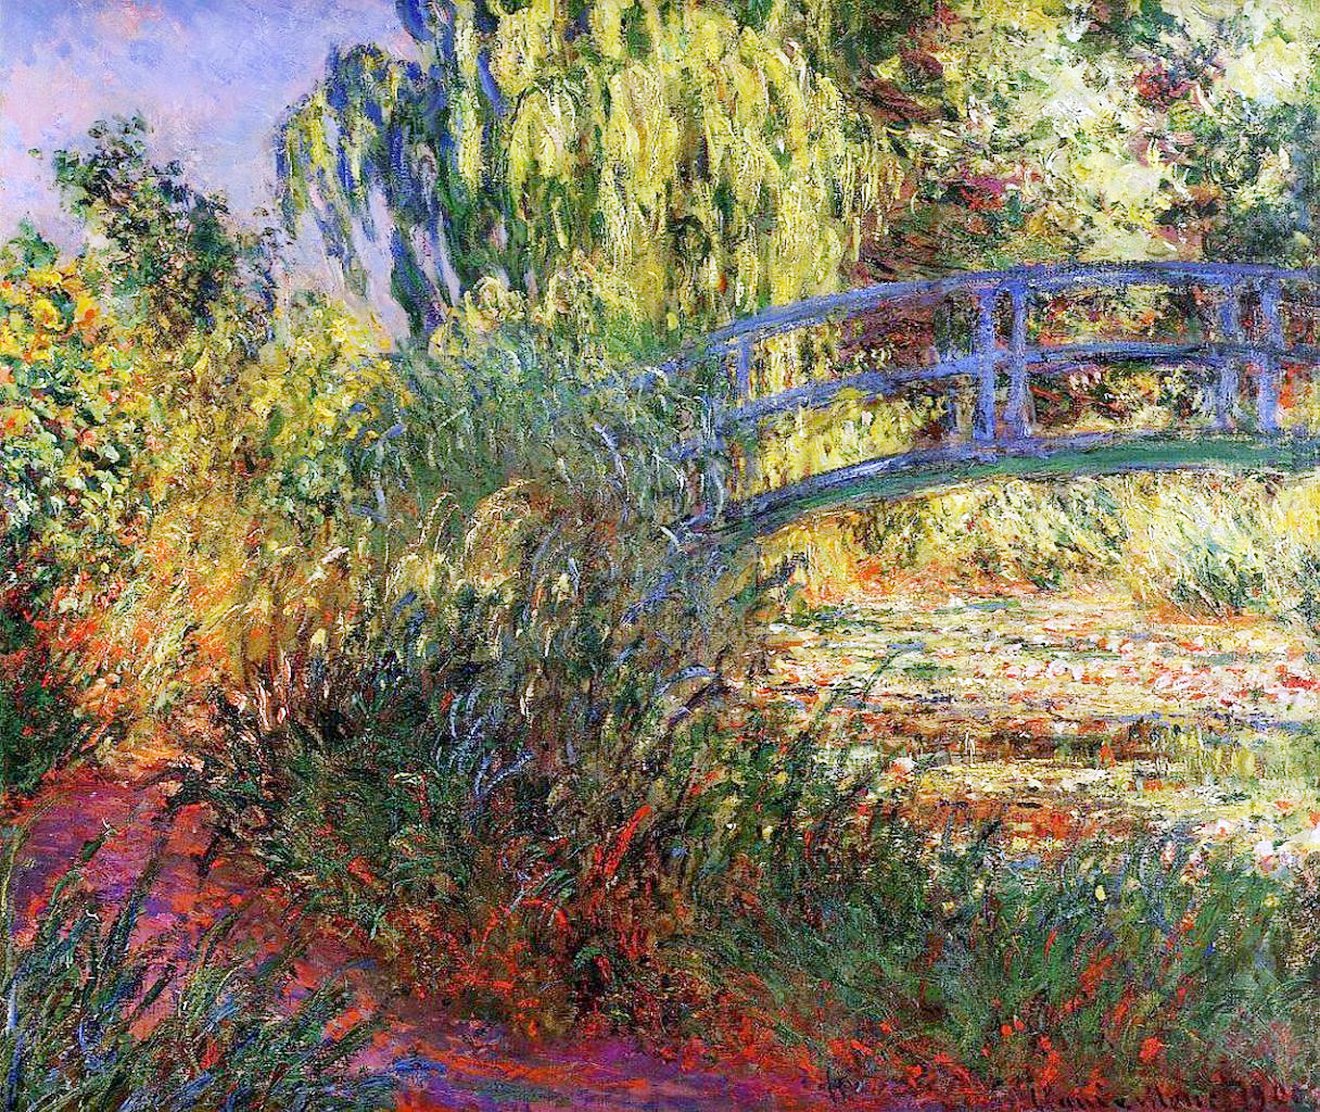 Claude+Monet-1840-1926 (131).jpg